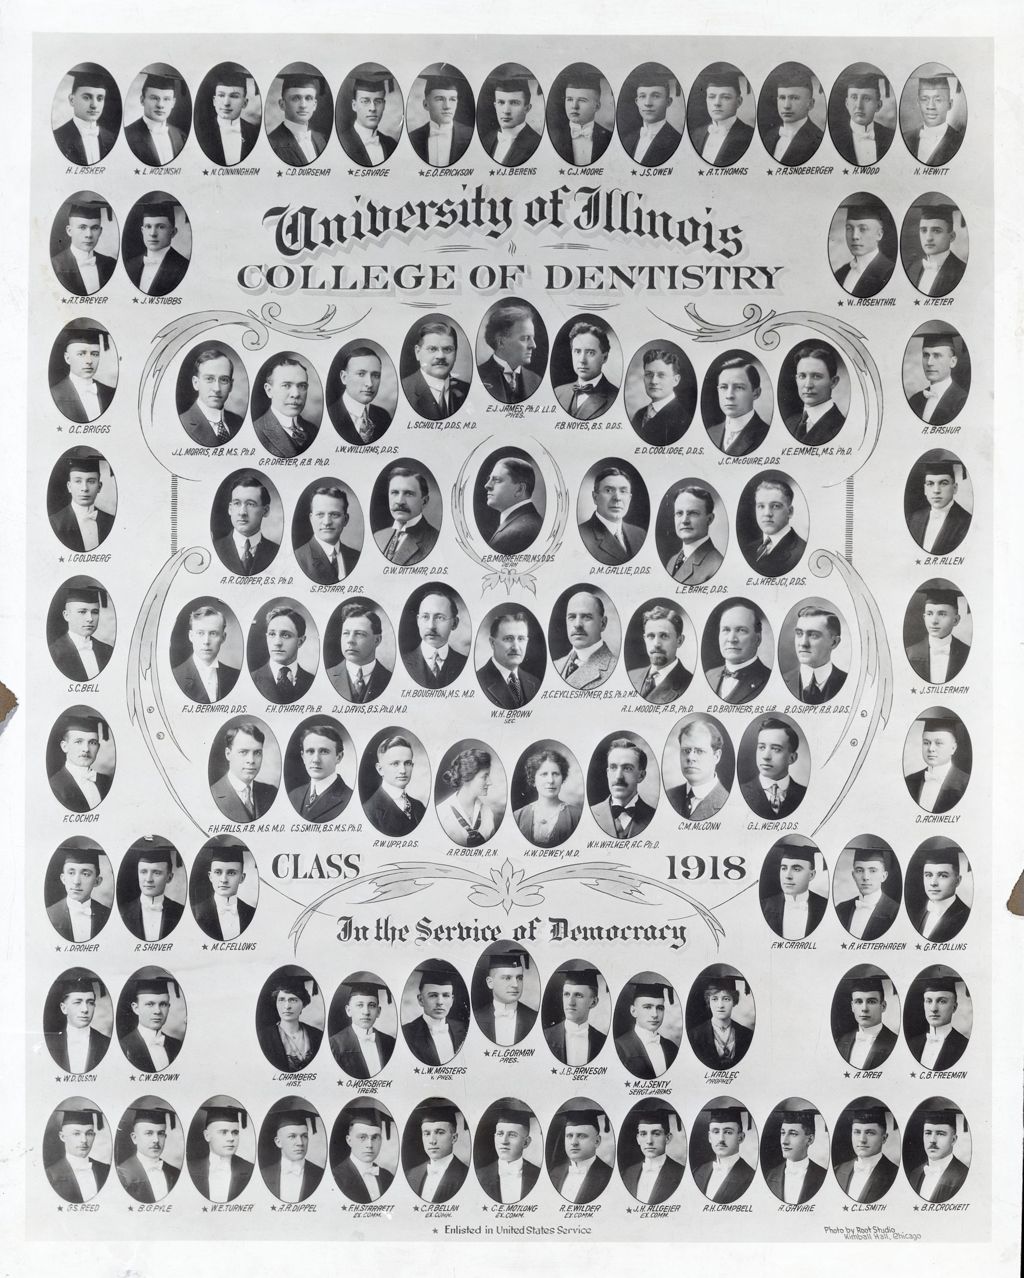 1918 graduating class, University of Illinois College of Dentistry